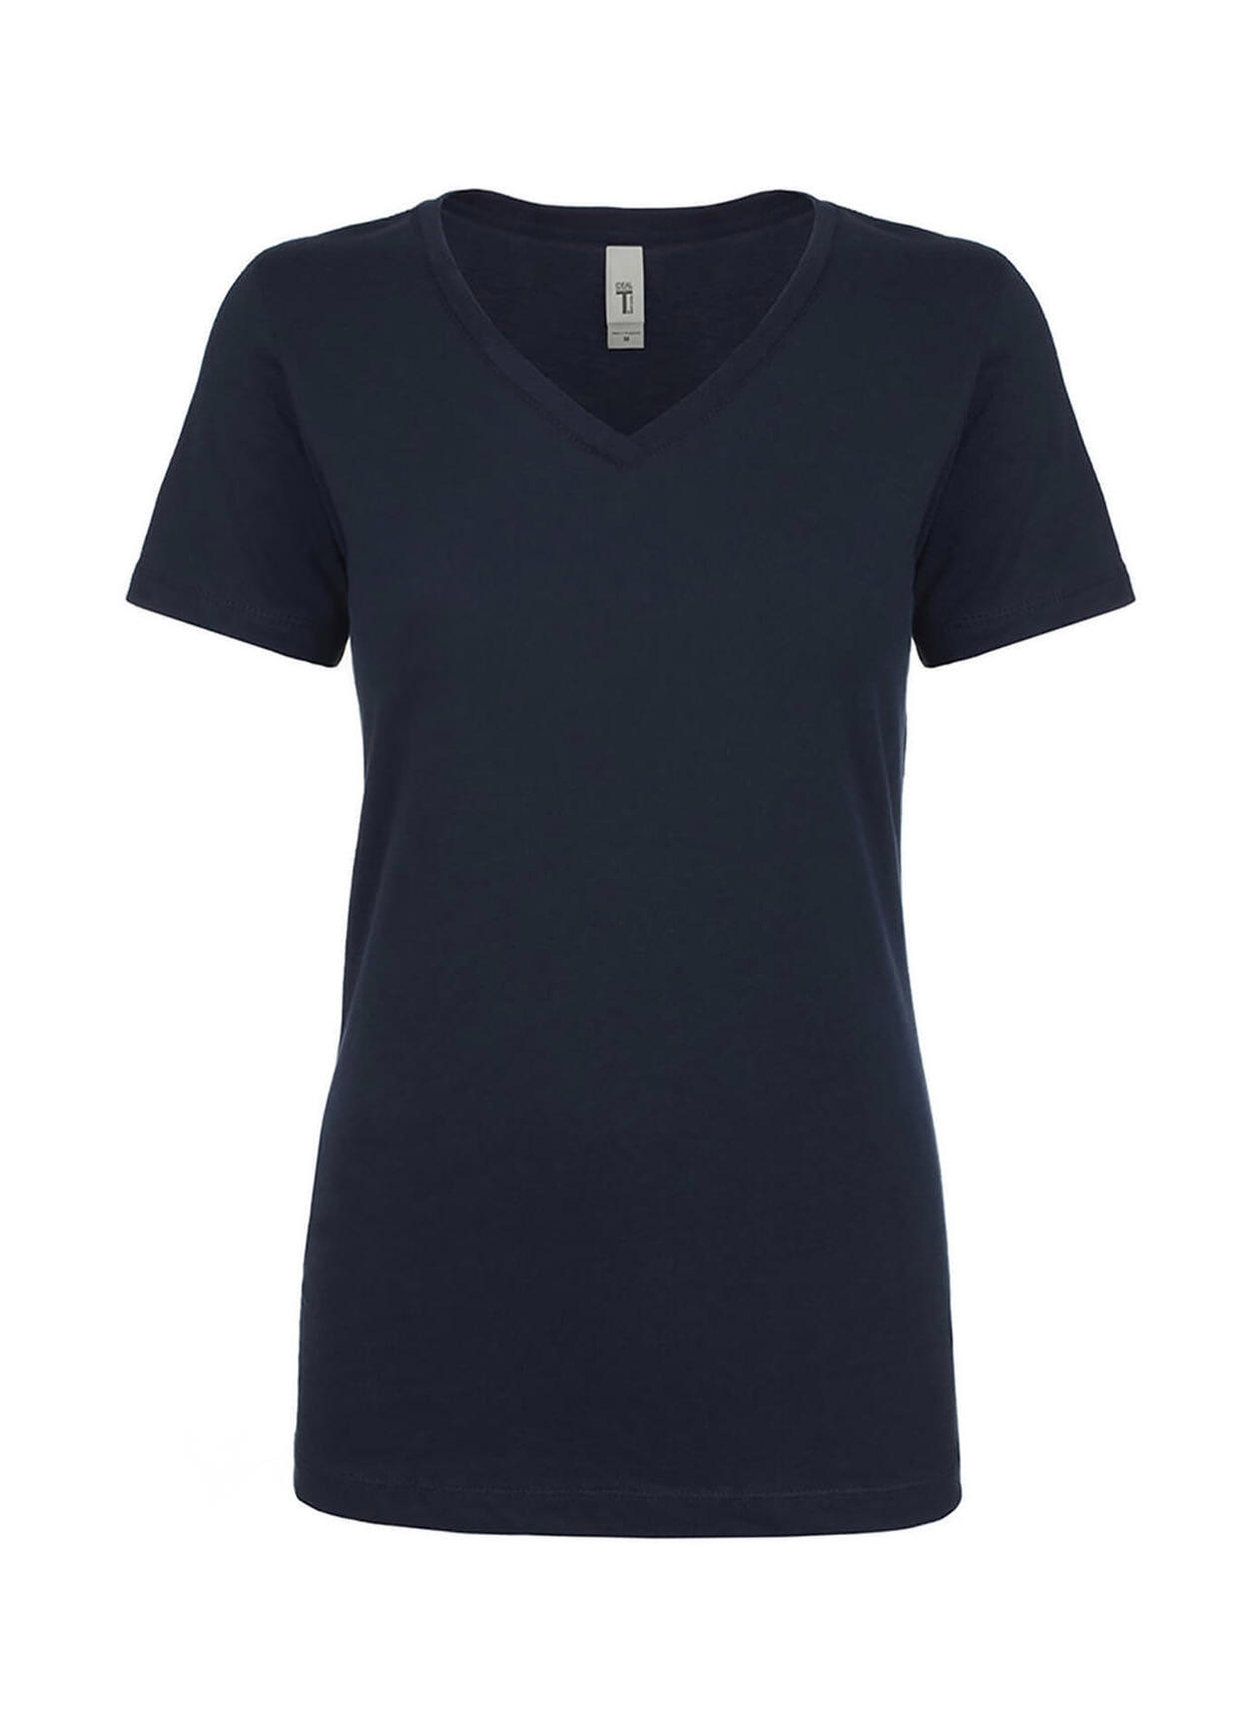 Next Level Women's Midnight Navy Ideal V-Neck T-Shirt